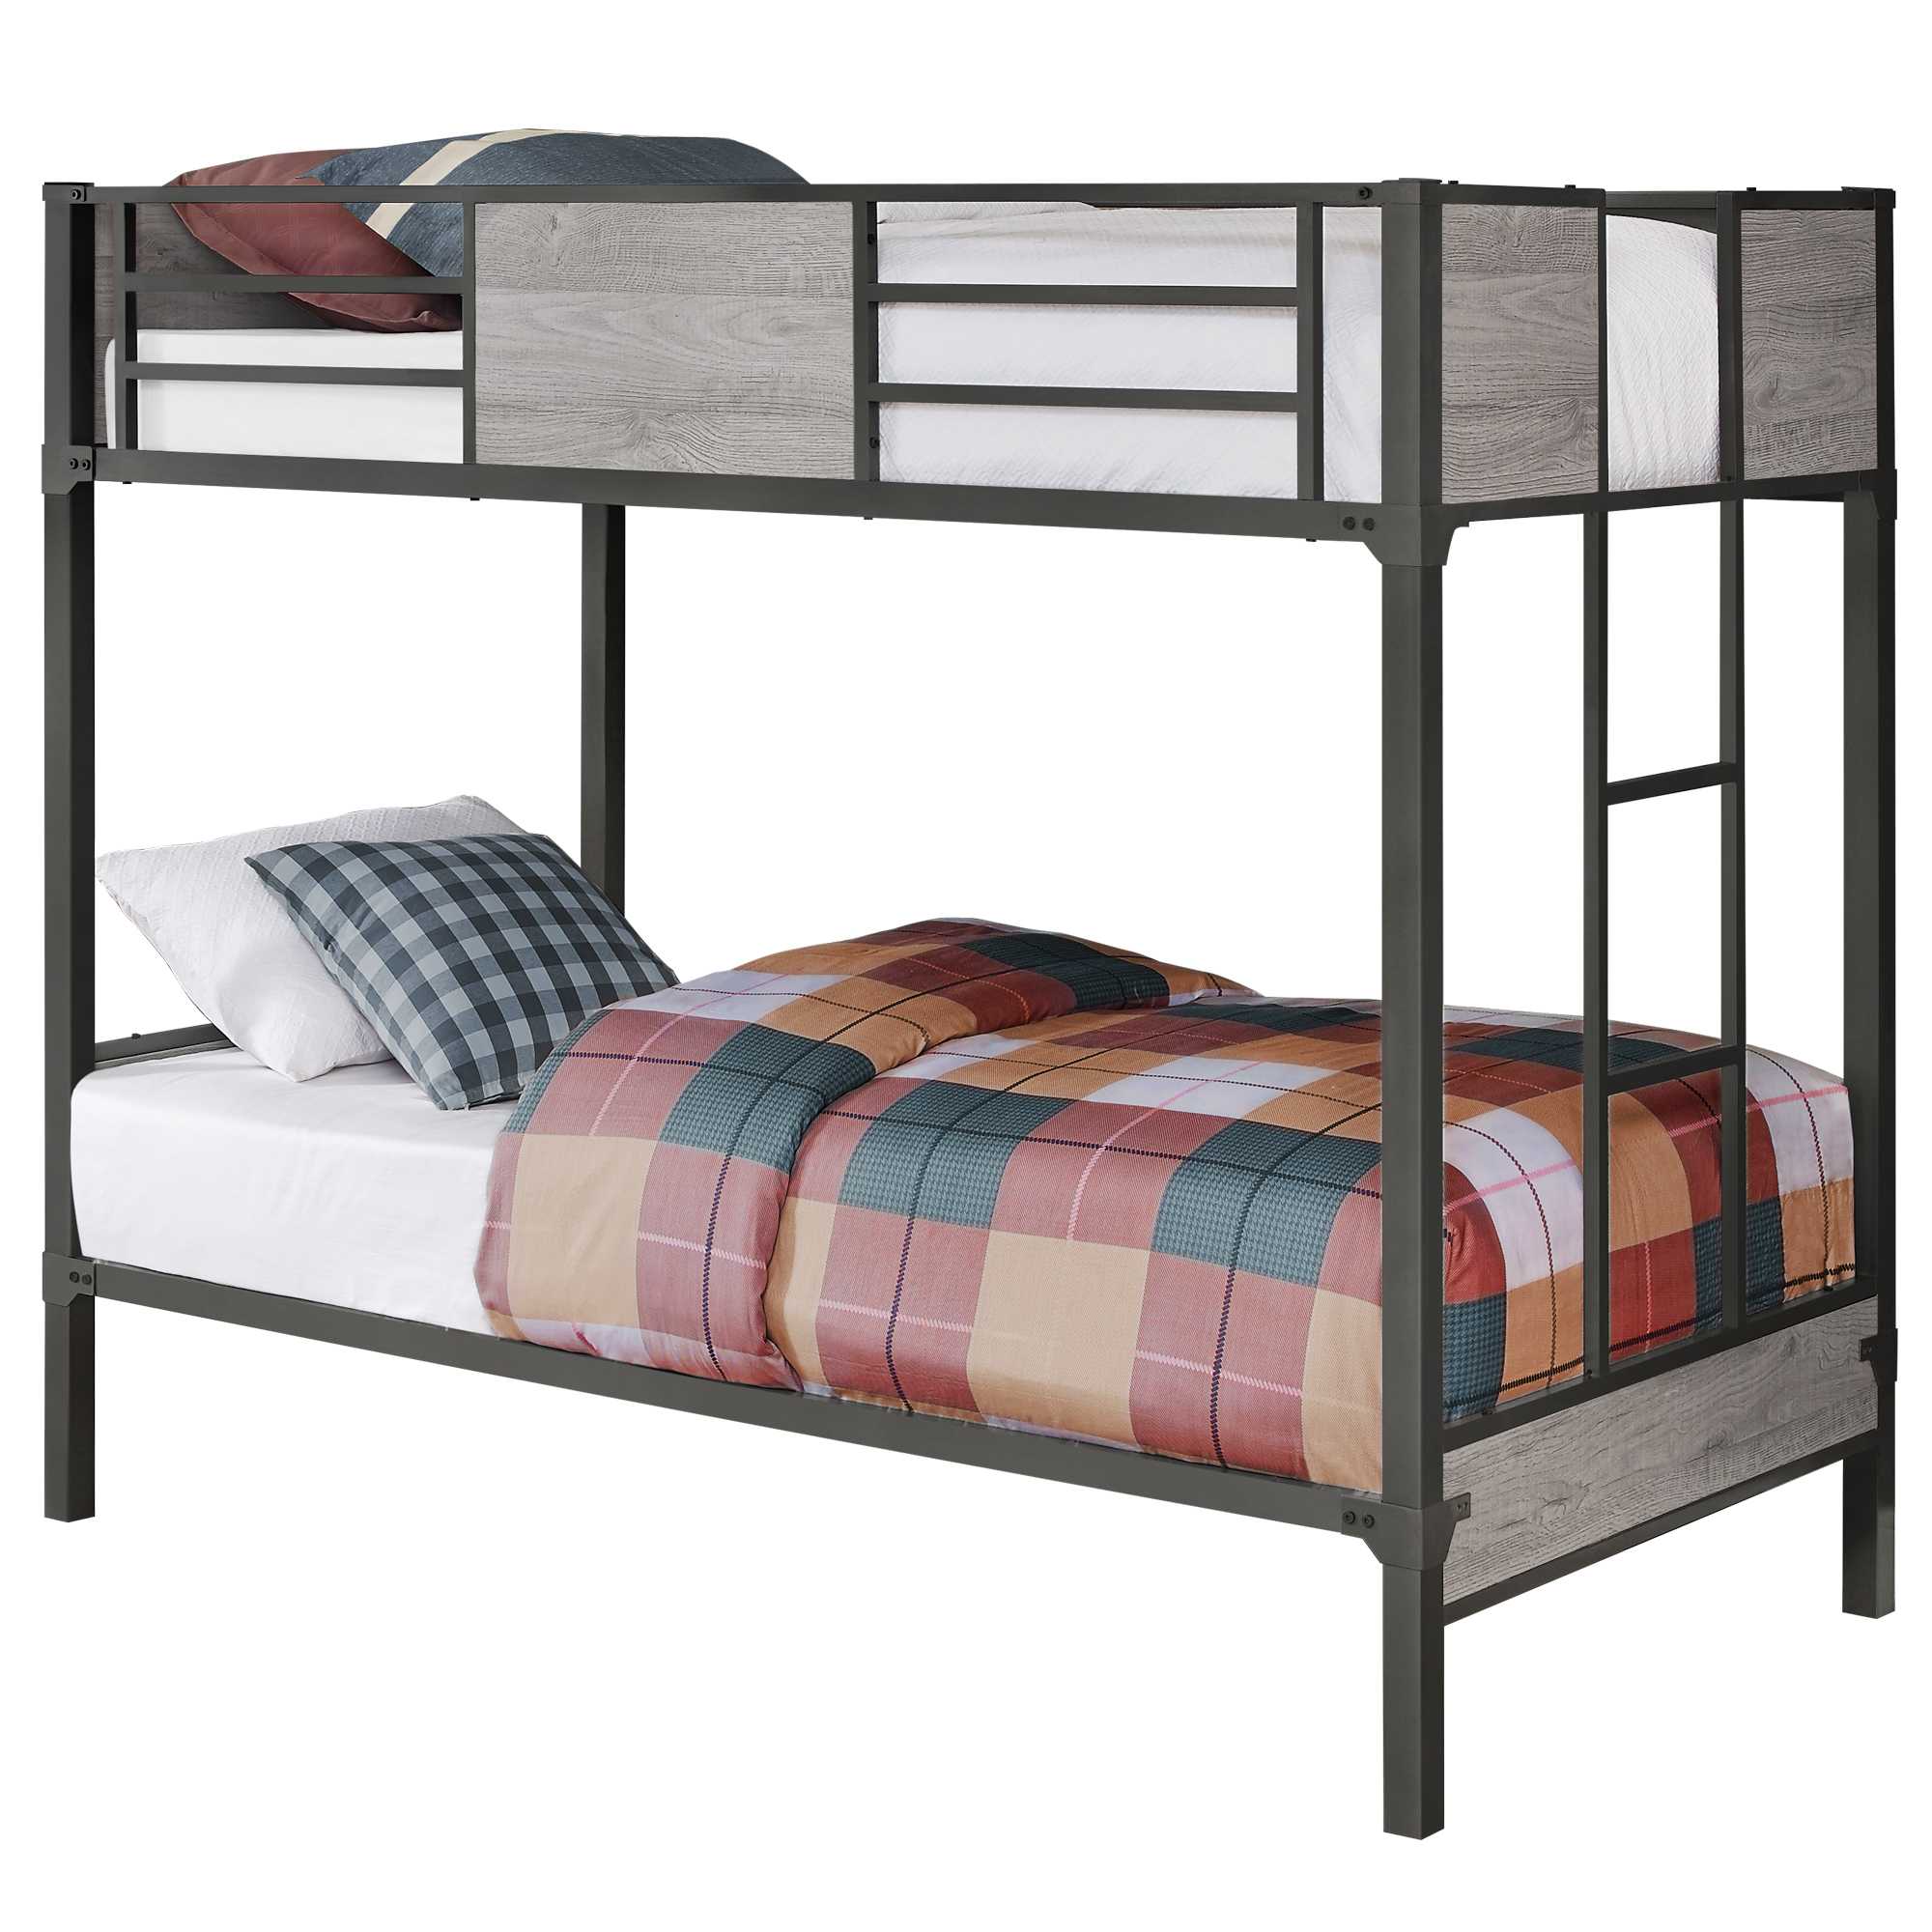 41" x 78.5" x 64.5" GreyDark Grey Metal Bunk Bed Twin Size